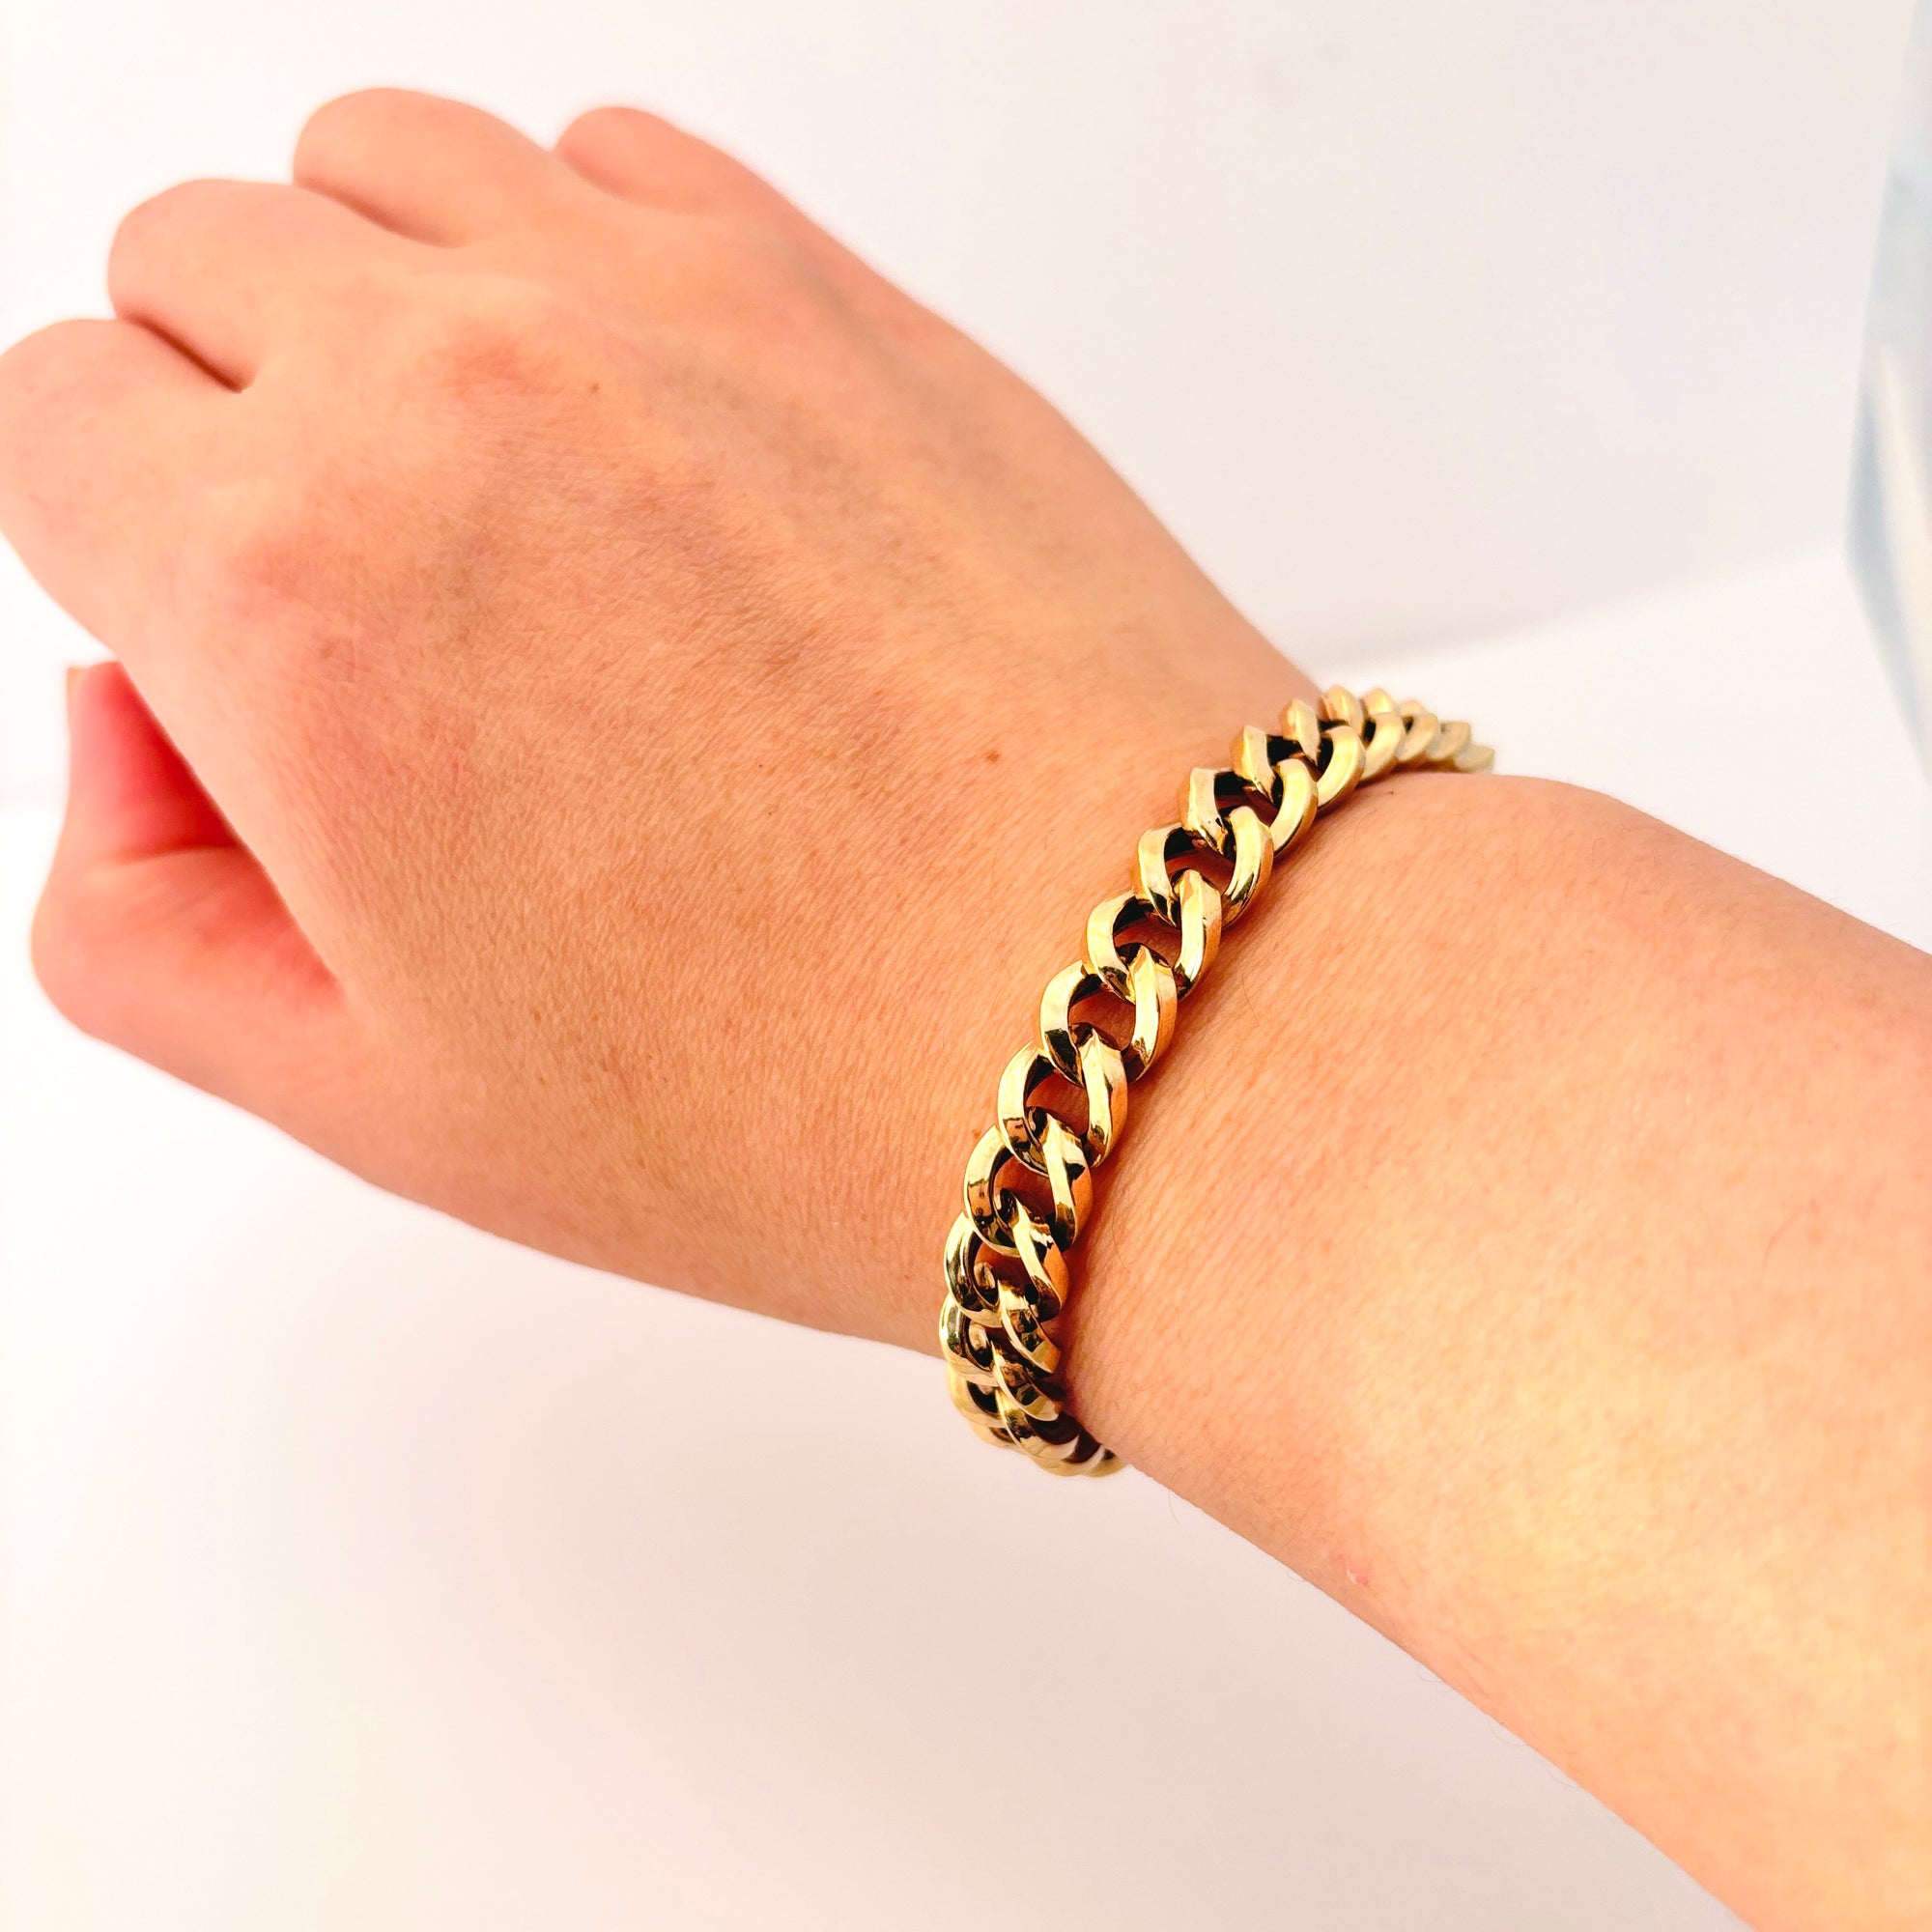 18k Yellow Gold Curb Chain Bracelet  | 7